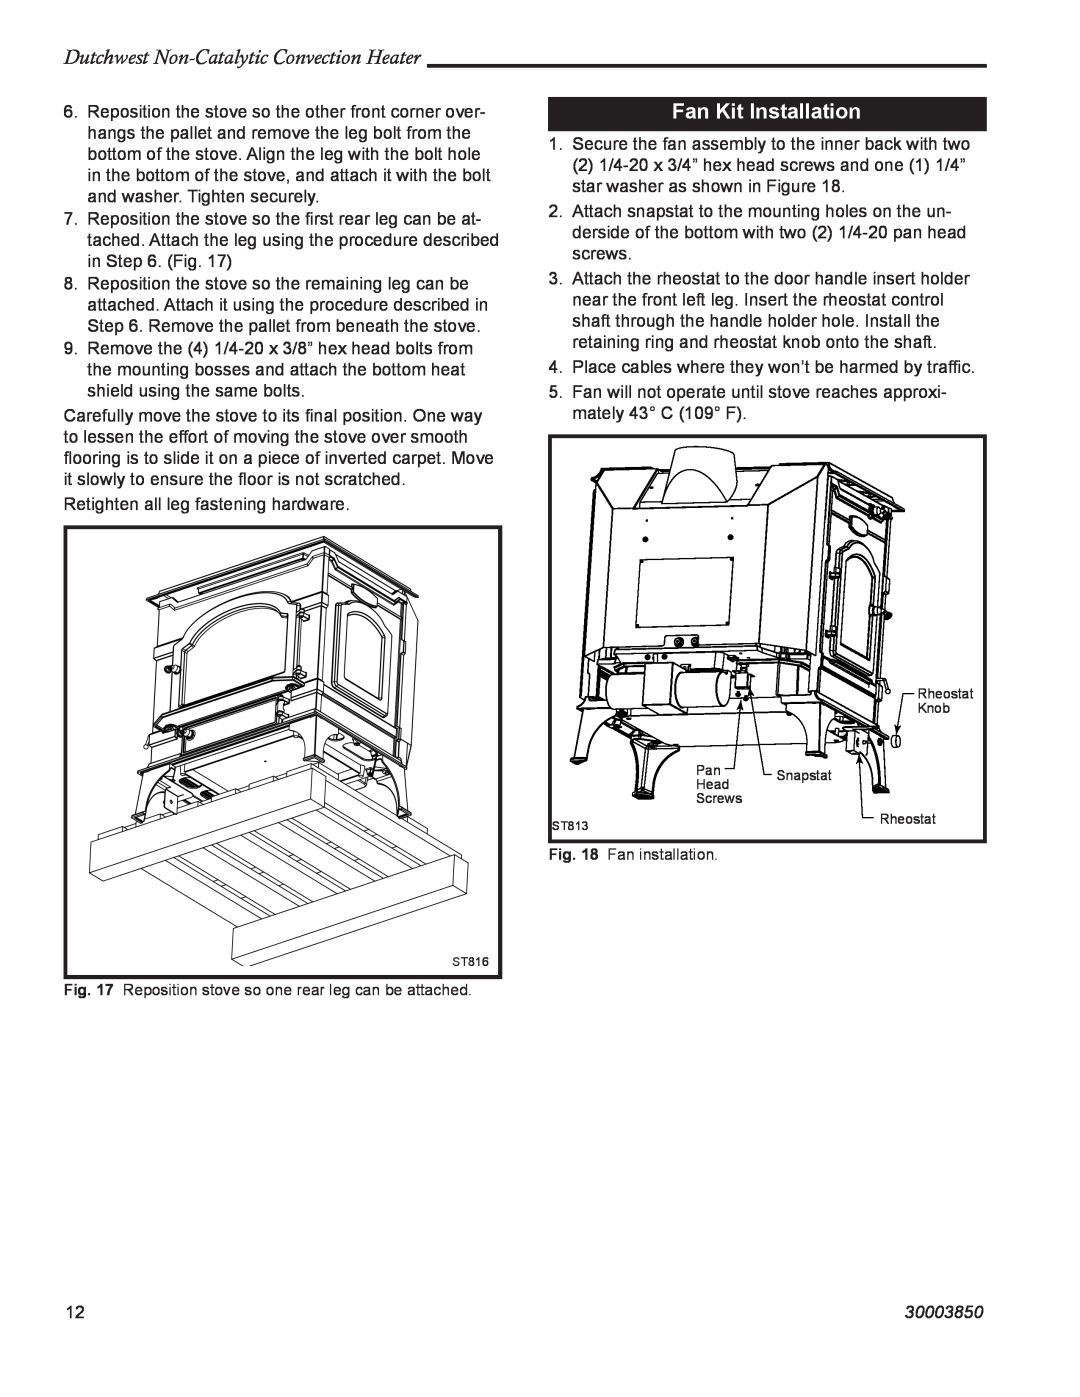 Vermont Casting 2478CE manual Fan Kit Installation, Dutchwest Non-CatalyticConvection Heater, 30003850 